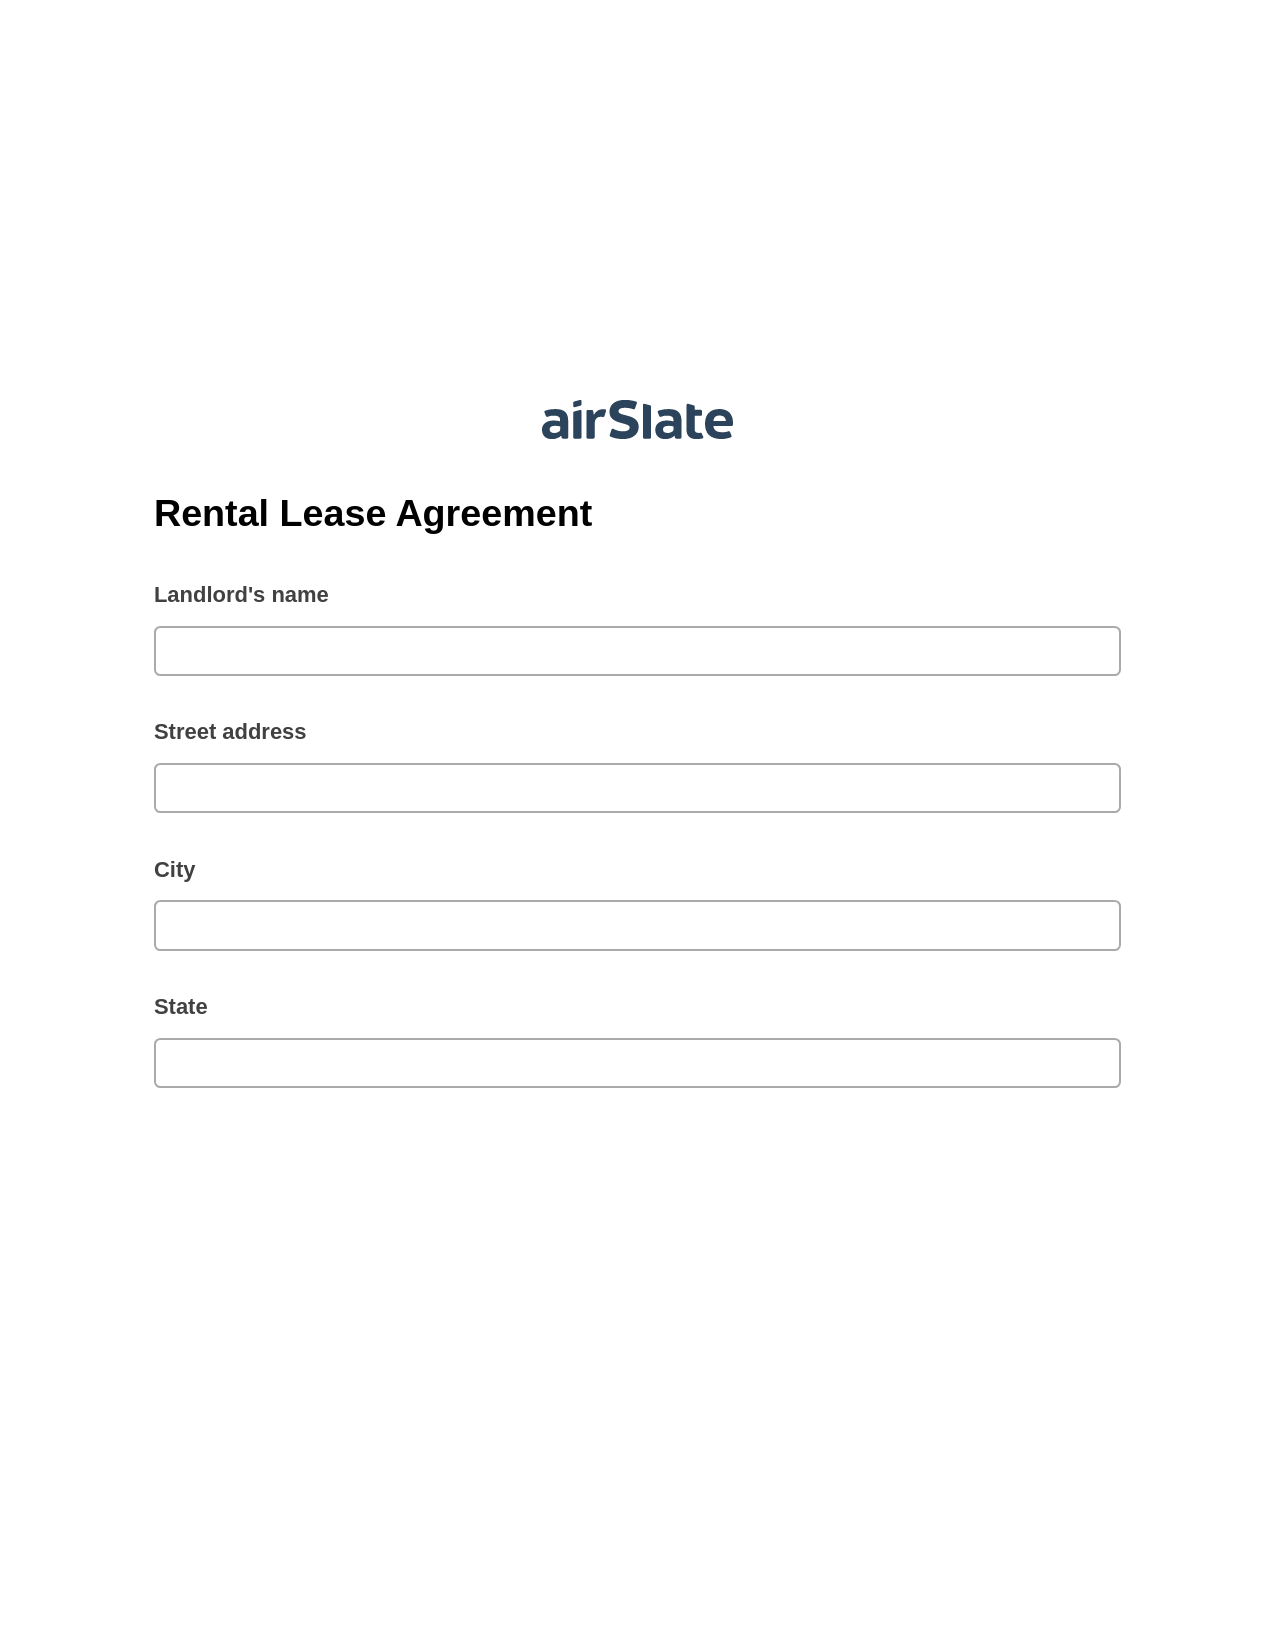 Rental Lease Agreement Pre-fill from Excel Spreadsheet Dropdown Options Bot, Create slate addon, Slack Notification Postfinish Bot